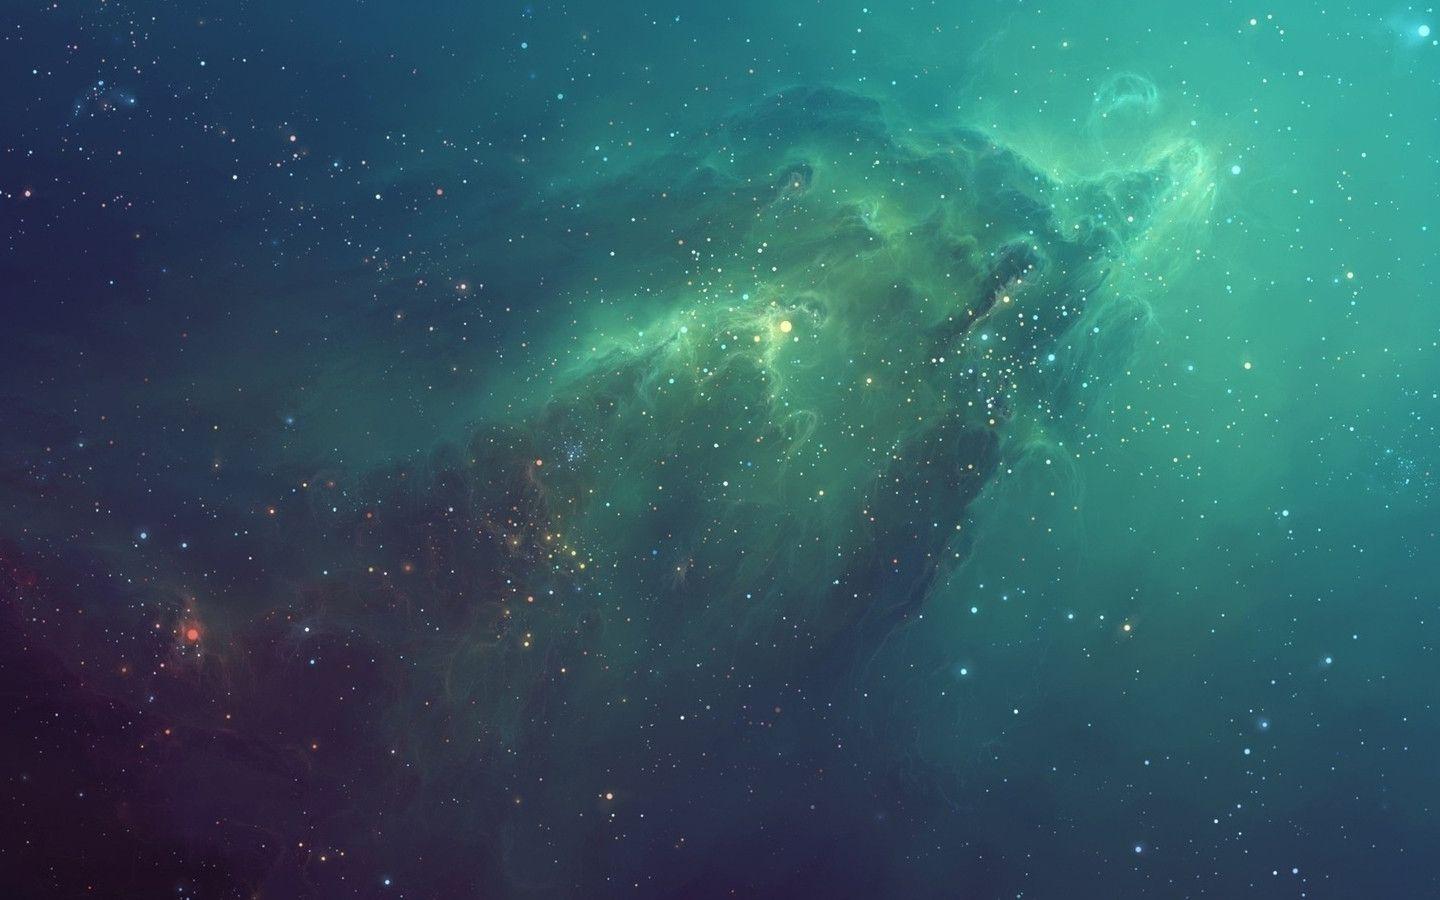 Galactic Nebula Mac Wallpaper Download. Free Mac Wallpaper Download